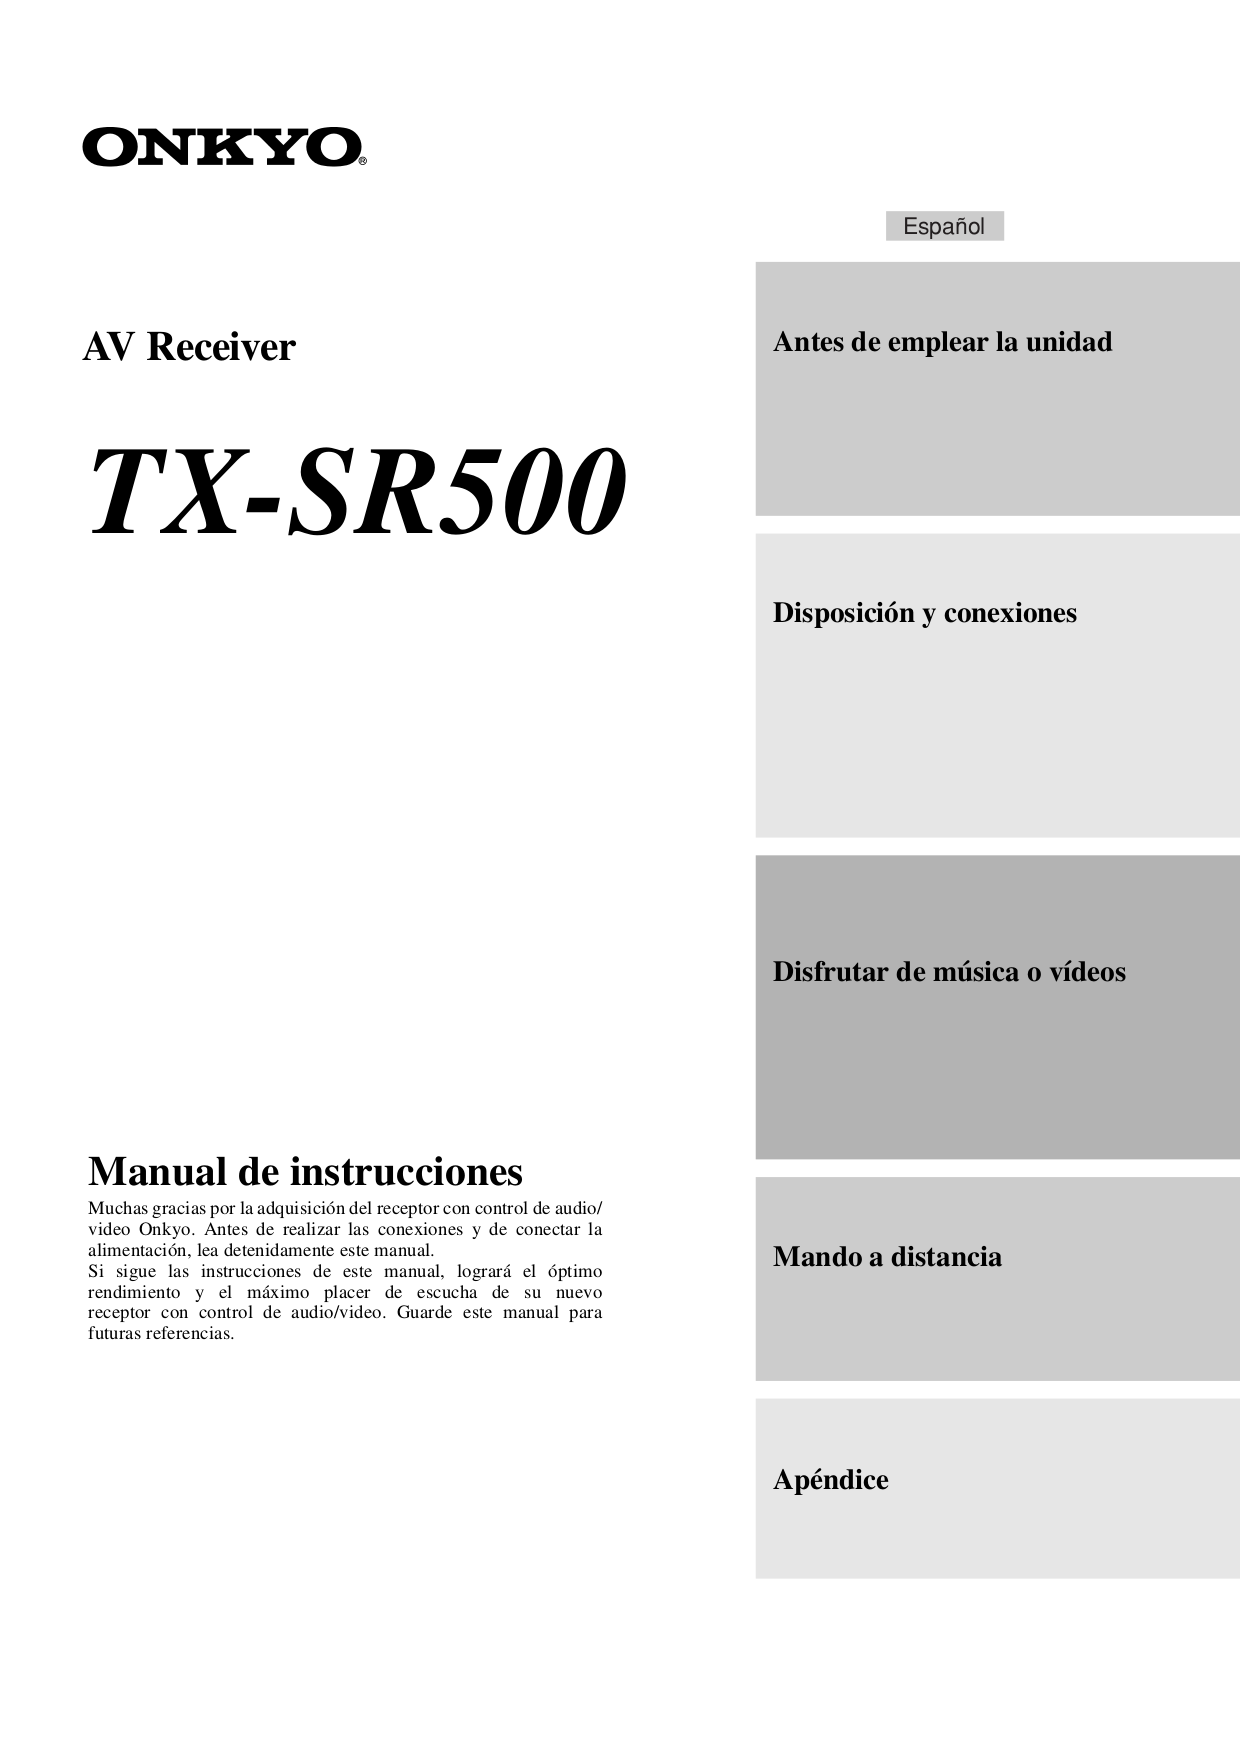 Download free pdf for Onkyo TX-SR500 Receiver manual